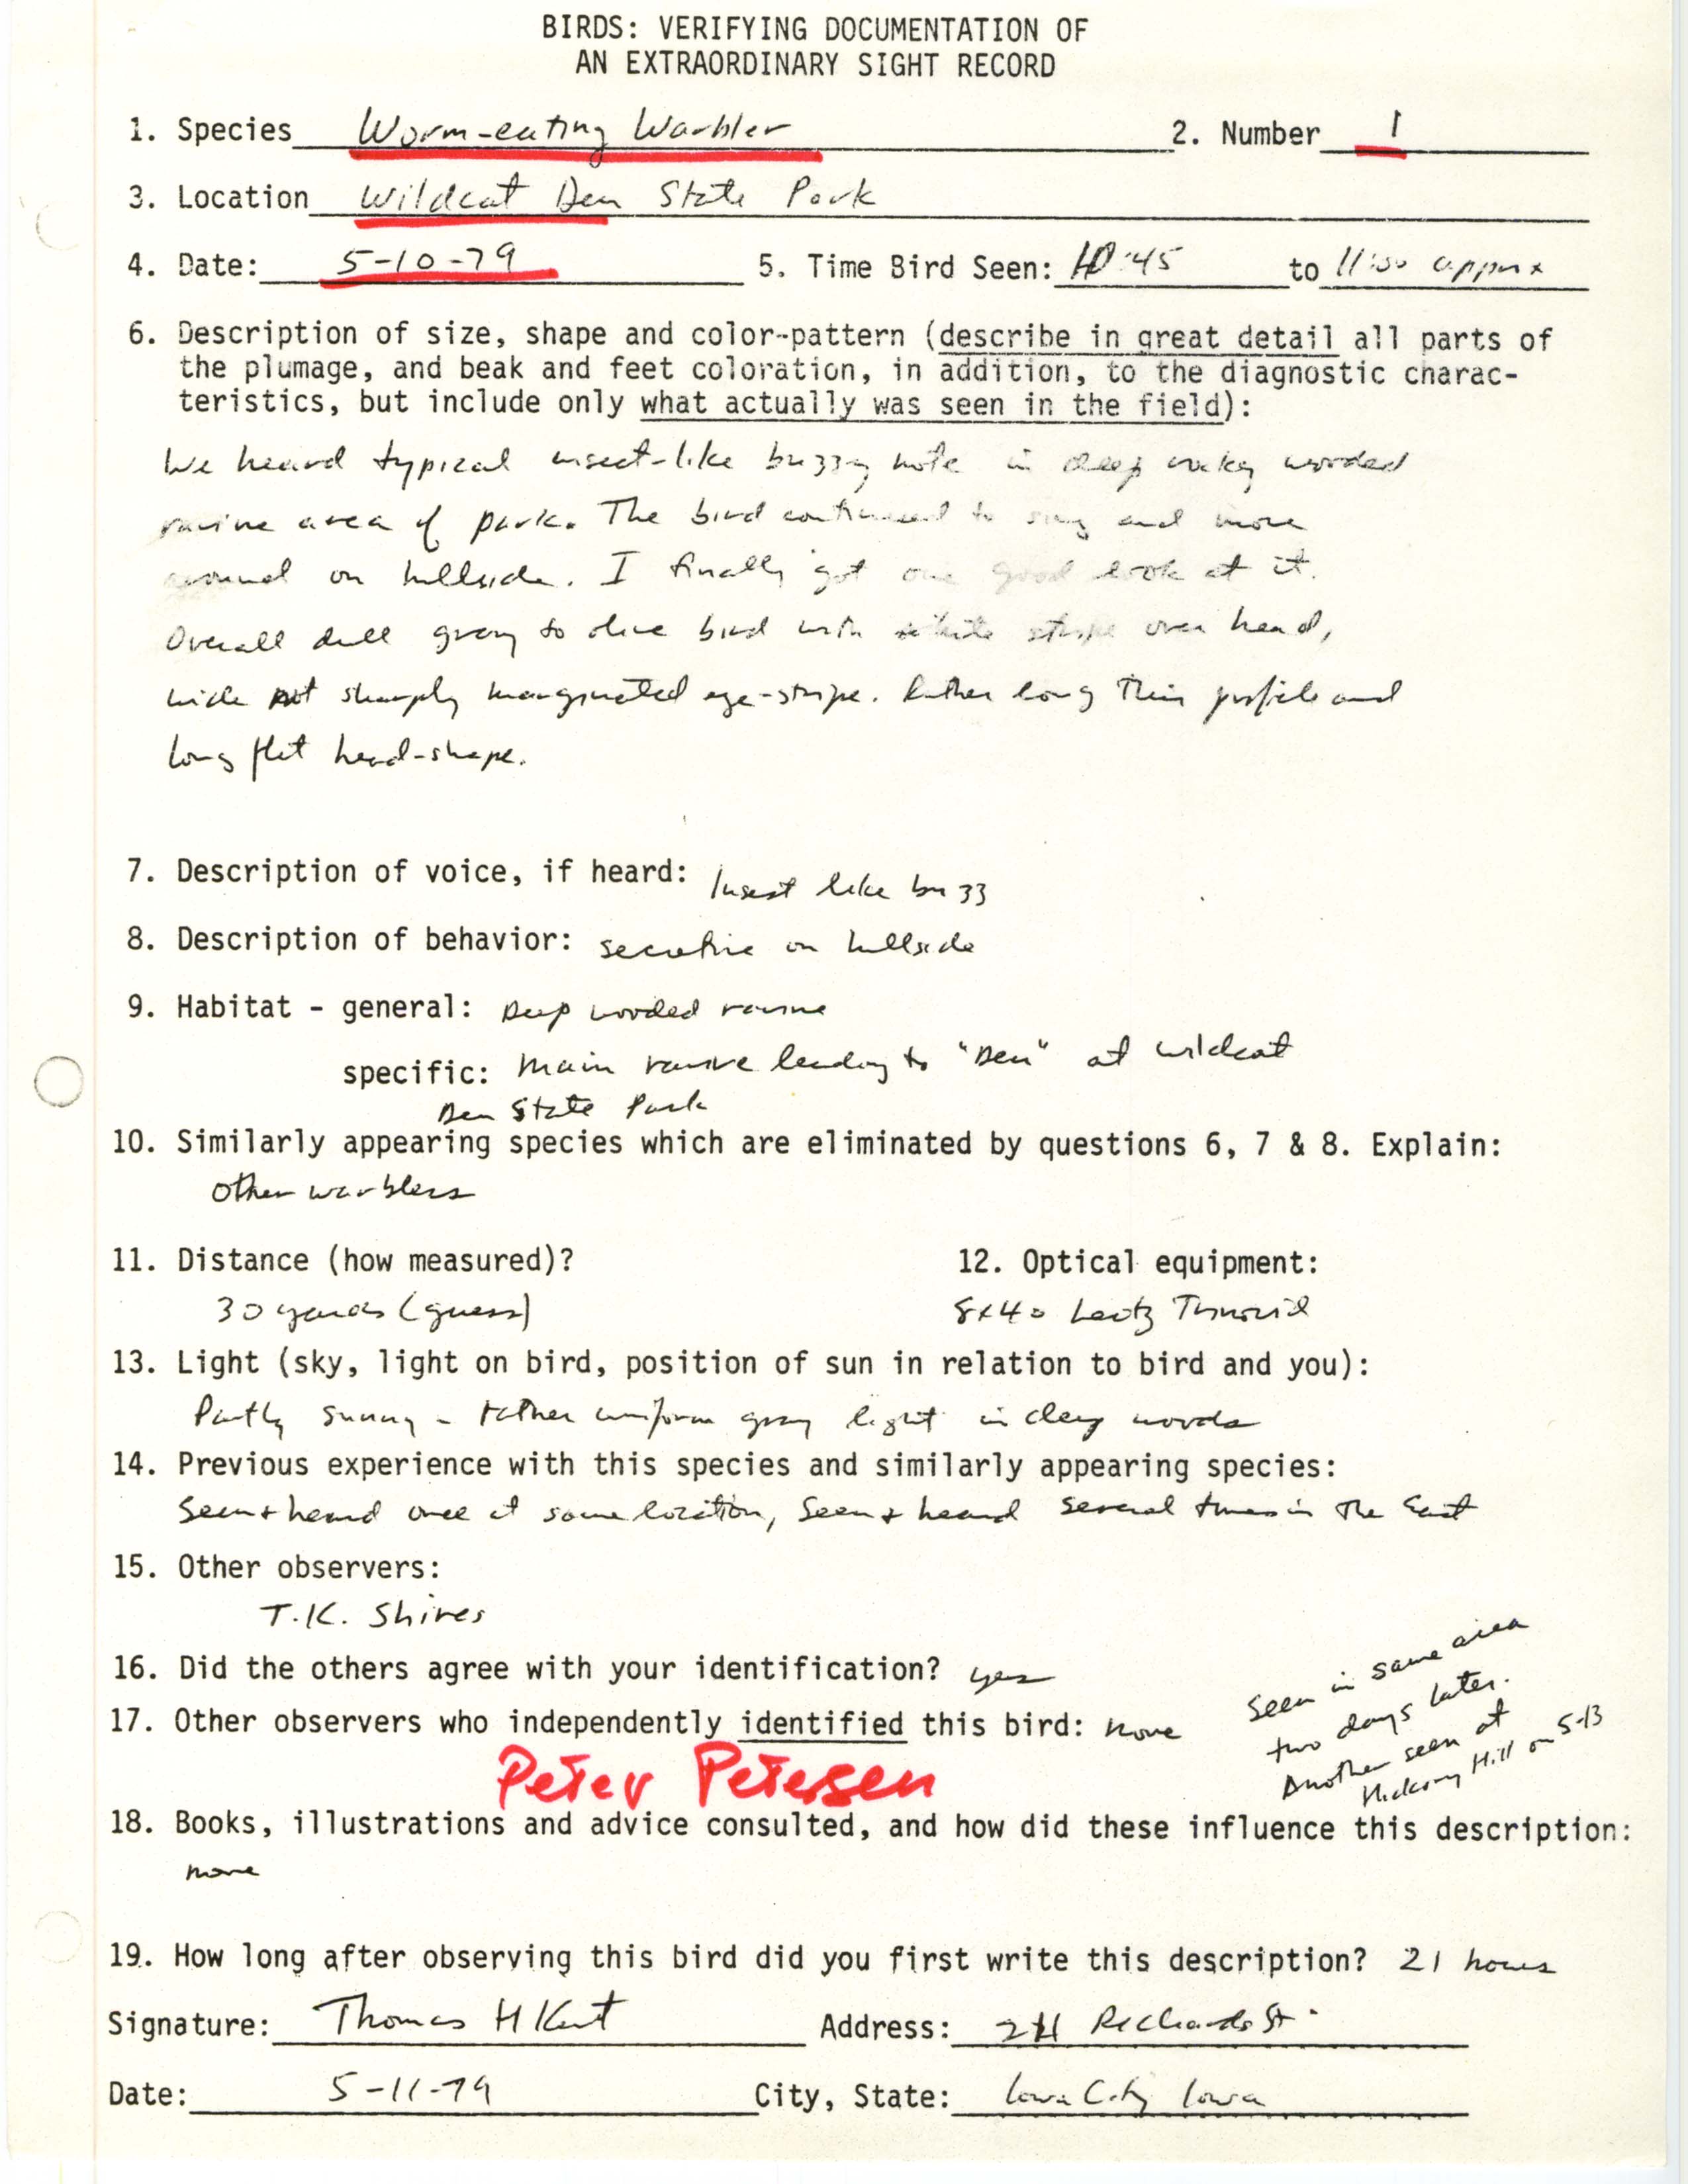 Rare bird documentation form for Worm-eating Warbler at Wildcat Den State Park, 1979